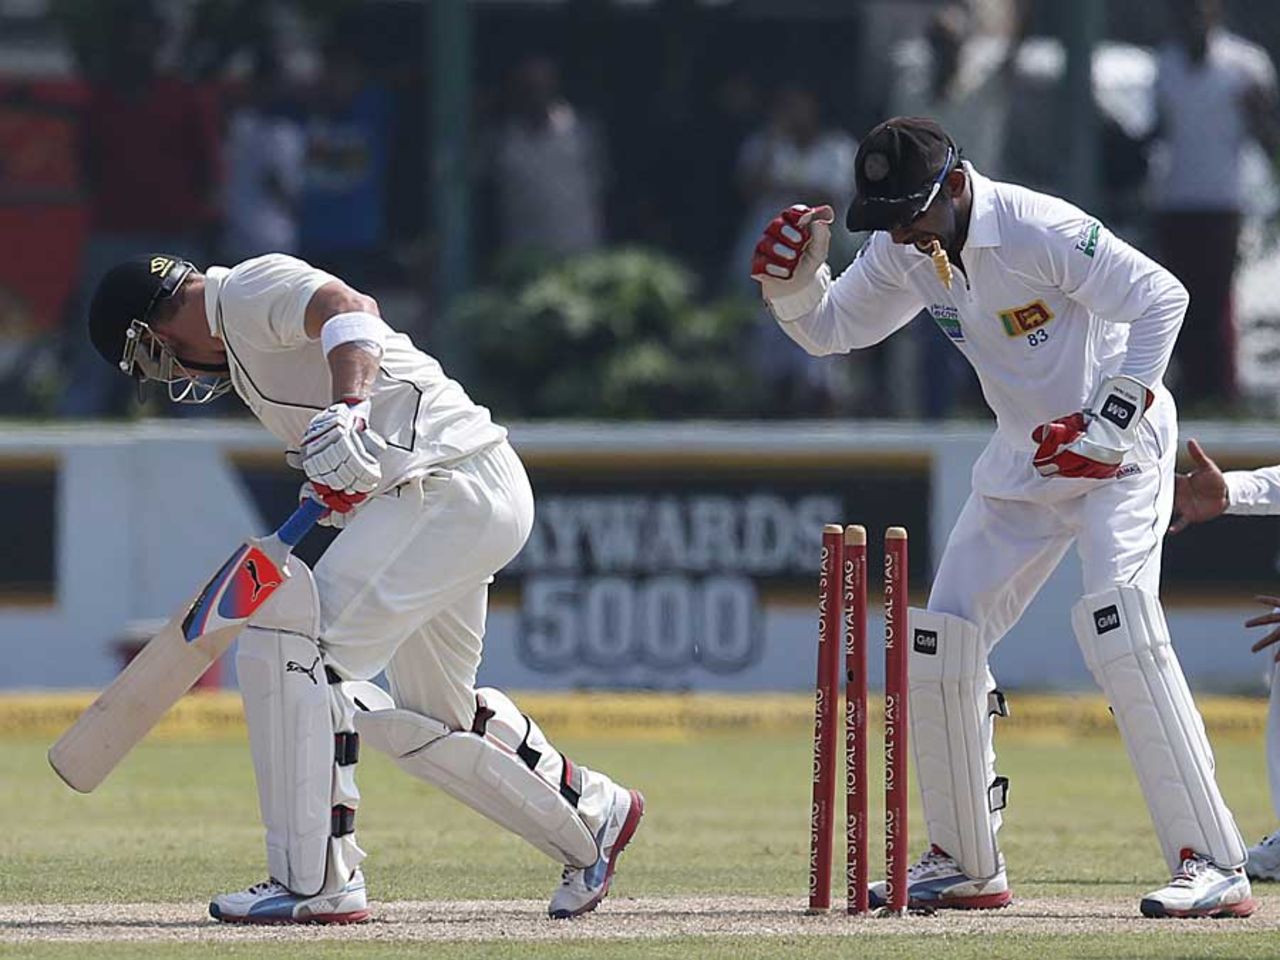 Brendon McCullum is bowled by Rangana Herath, Sri Lanka v New Zealand, 1st Test, Galle, 1st day, November 17, 2012